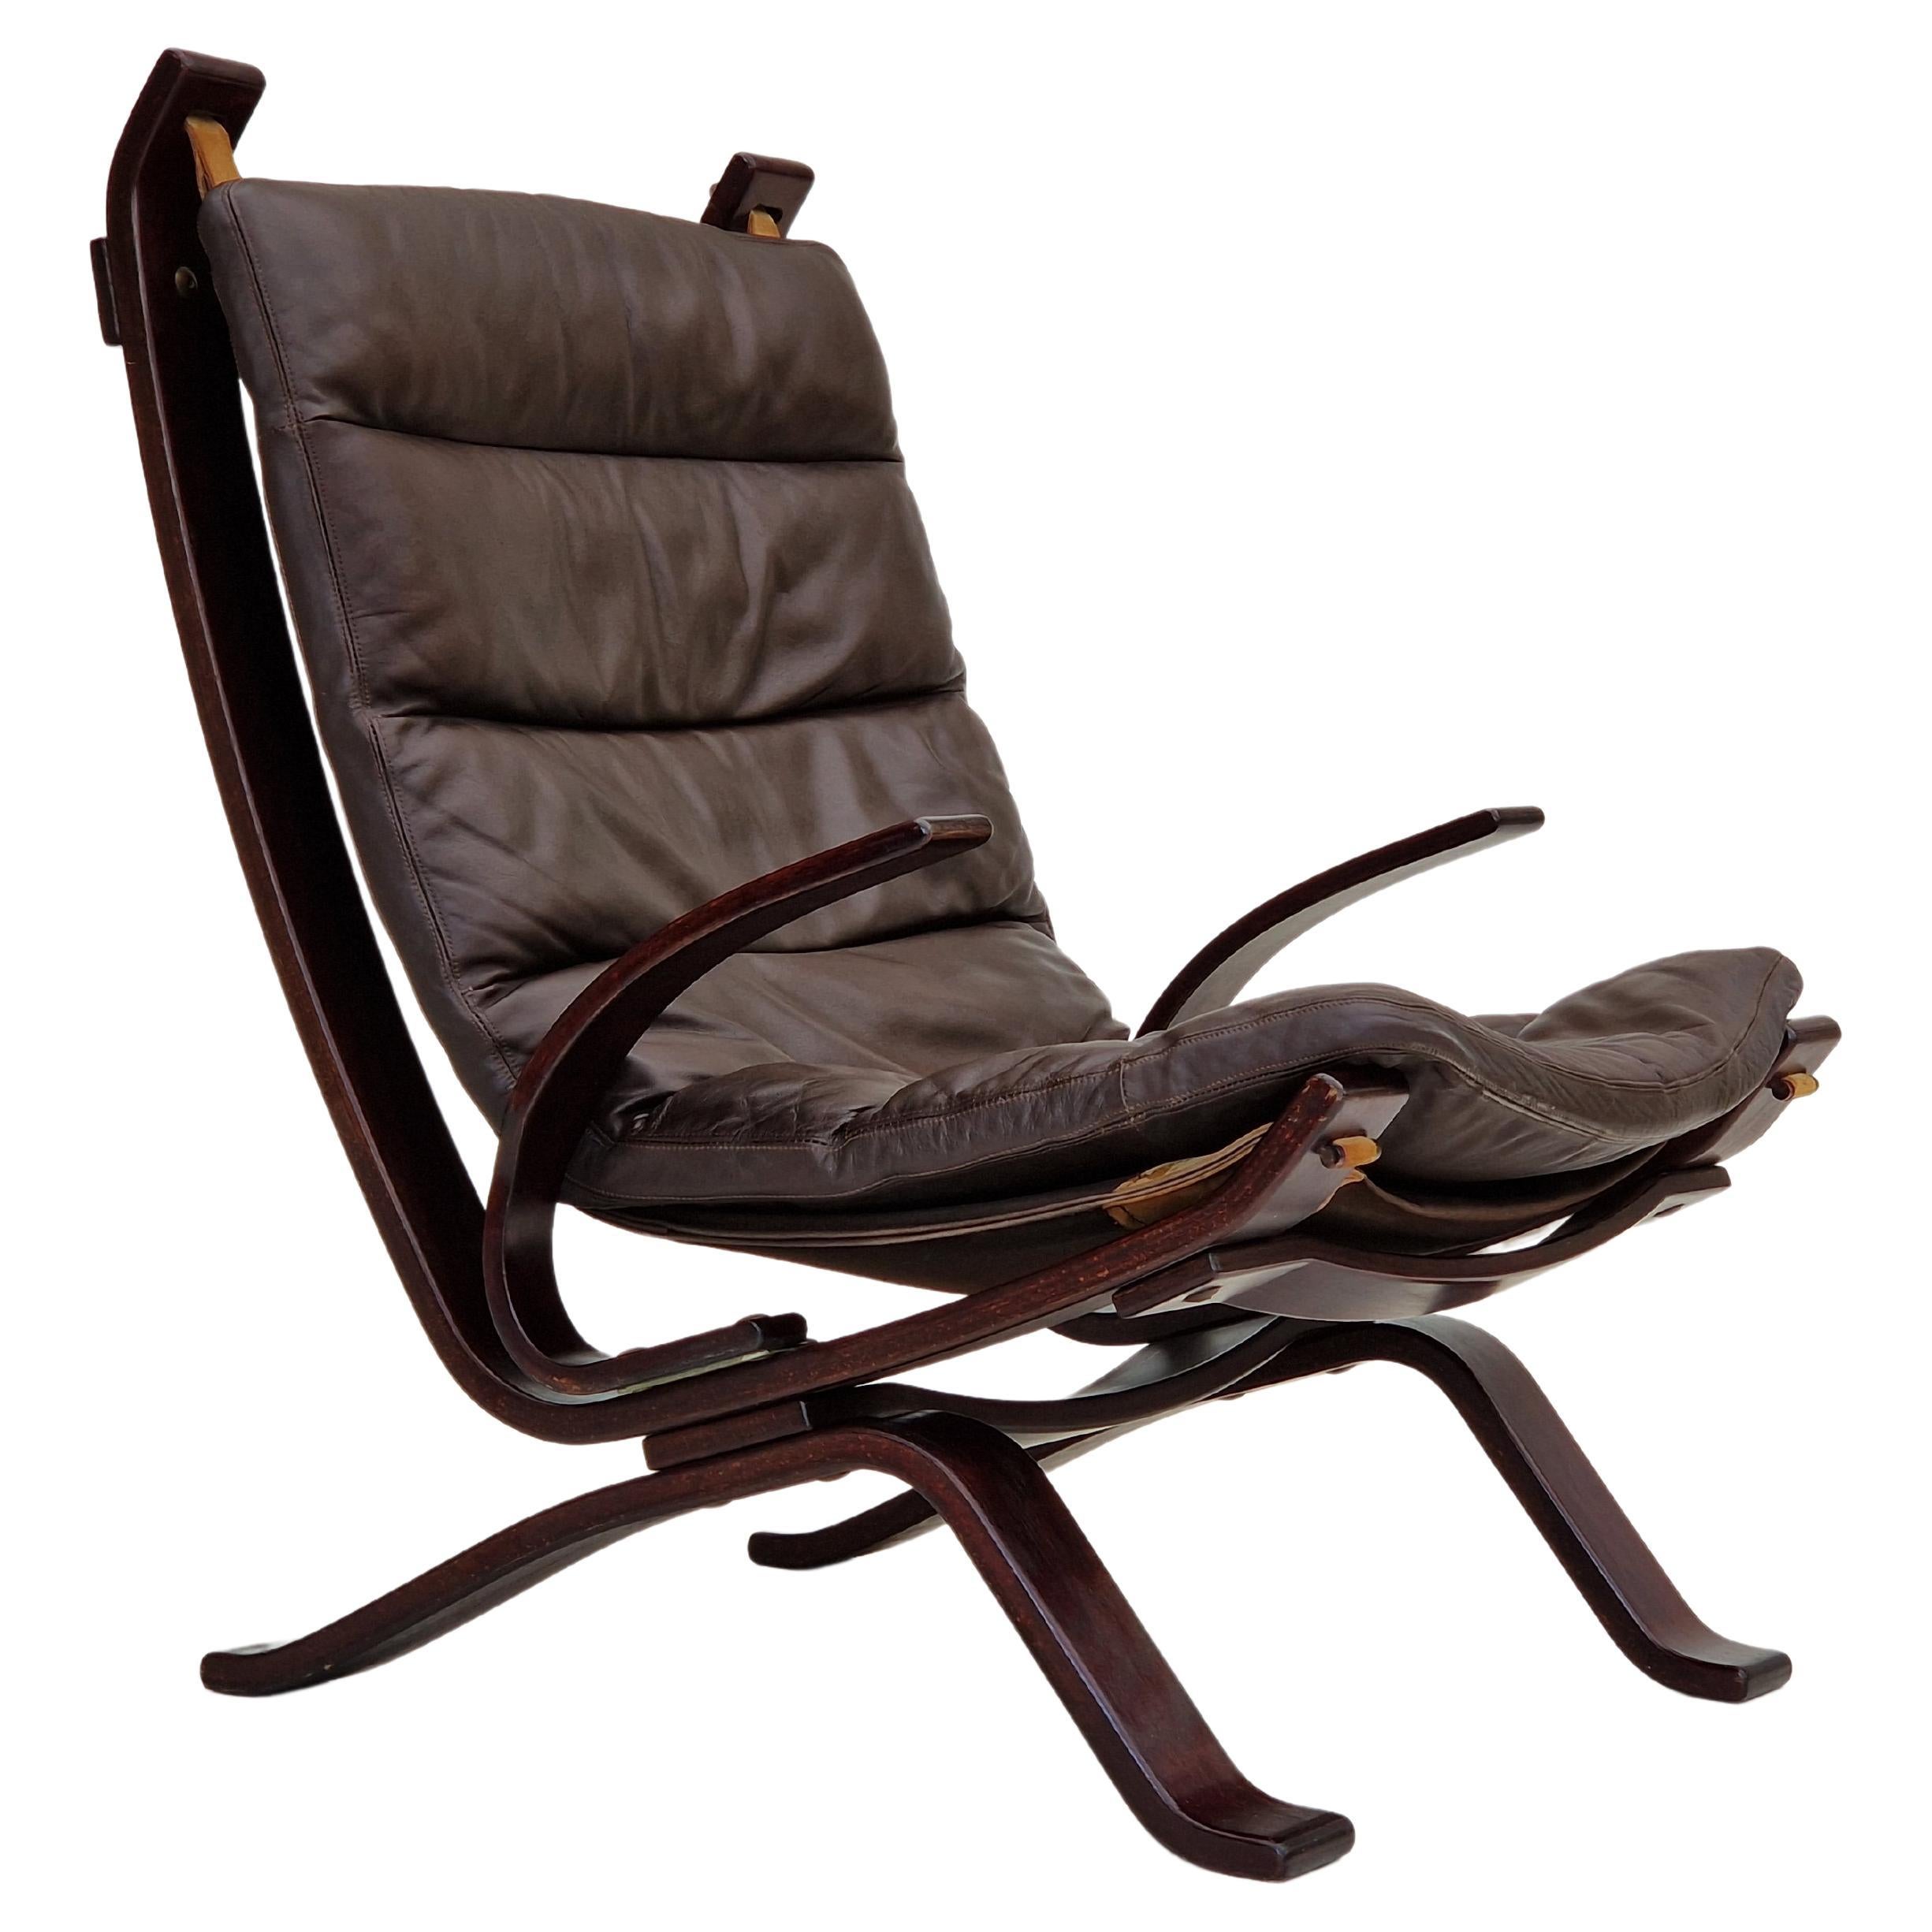 1970s, Danish design by Brammin Møbler, "Focus" lounge chair, original very good en vente